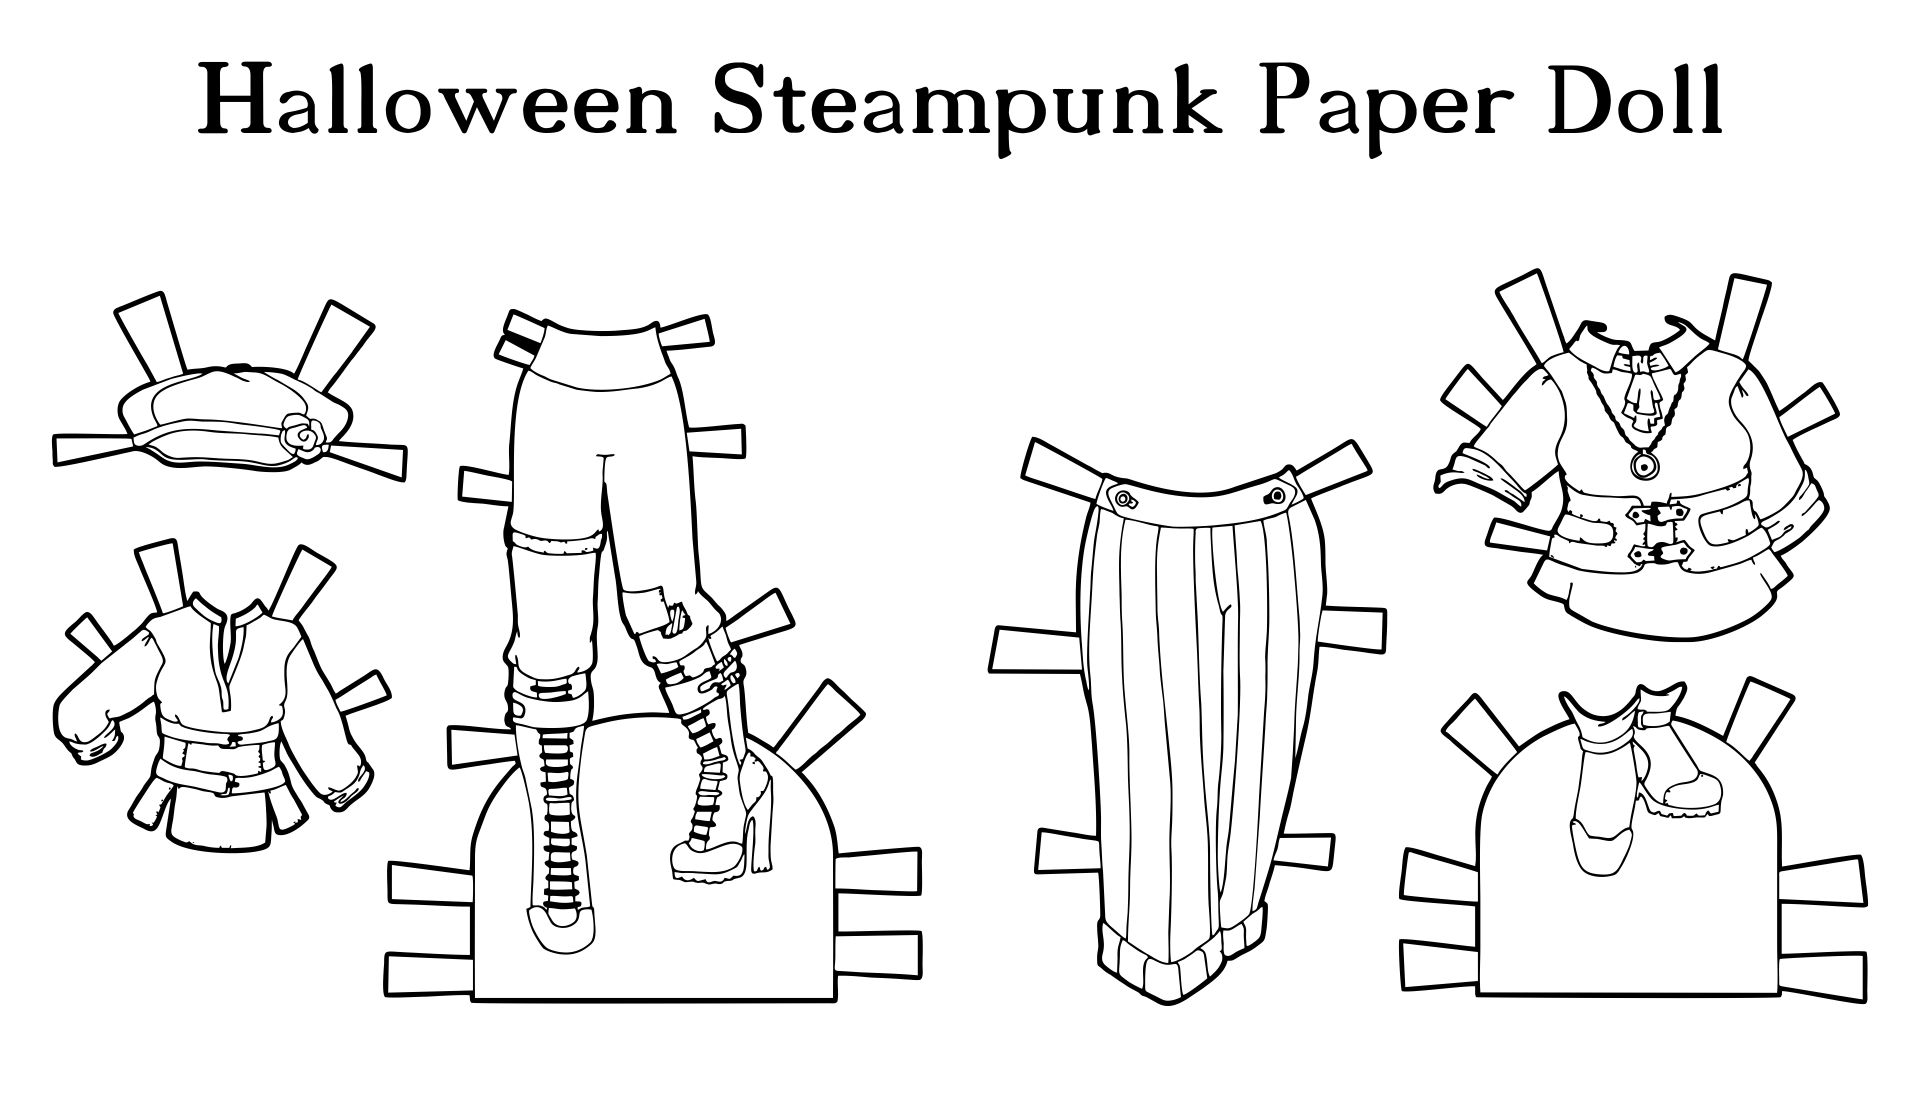 Steampunk Paper Doll Halloween